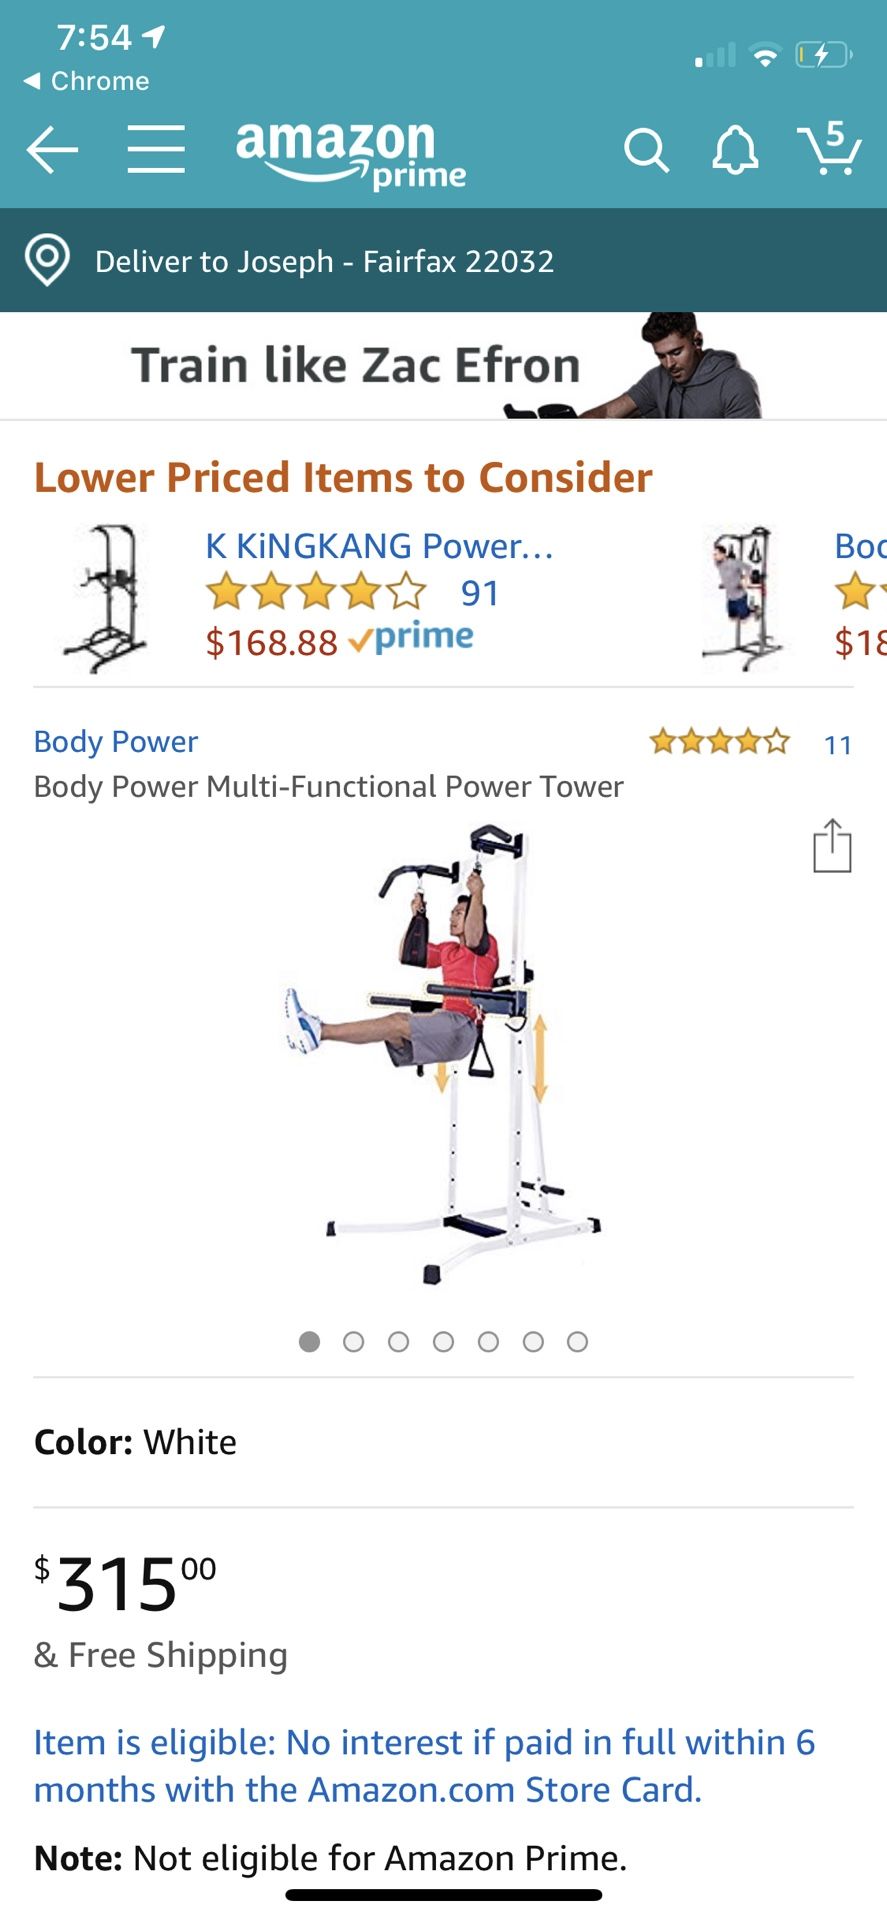 Body Power Multi-Functional Power Tower